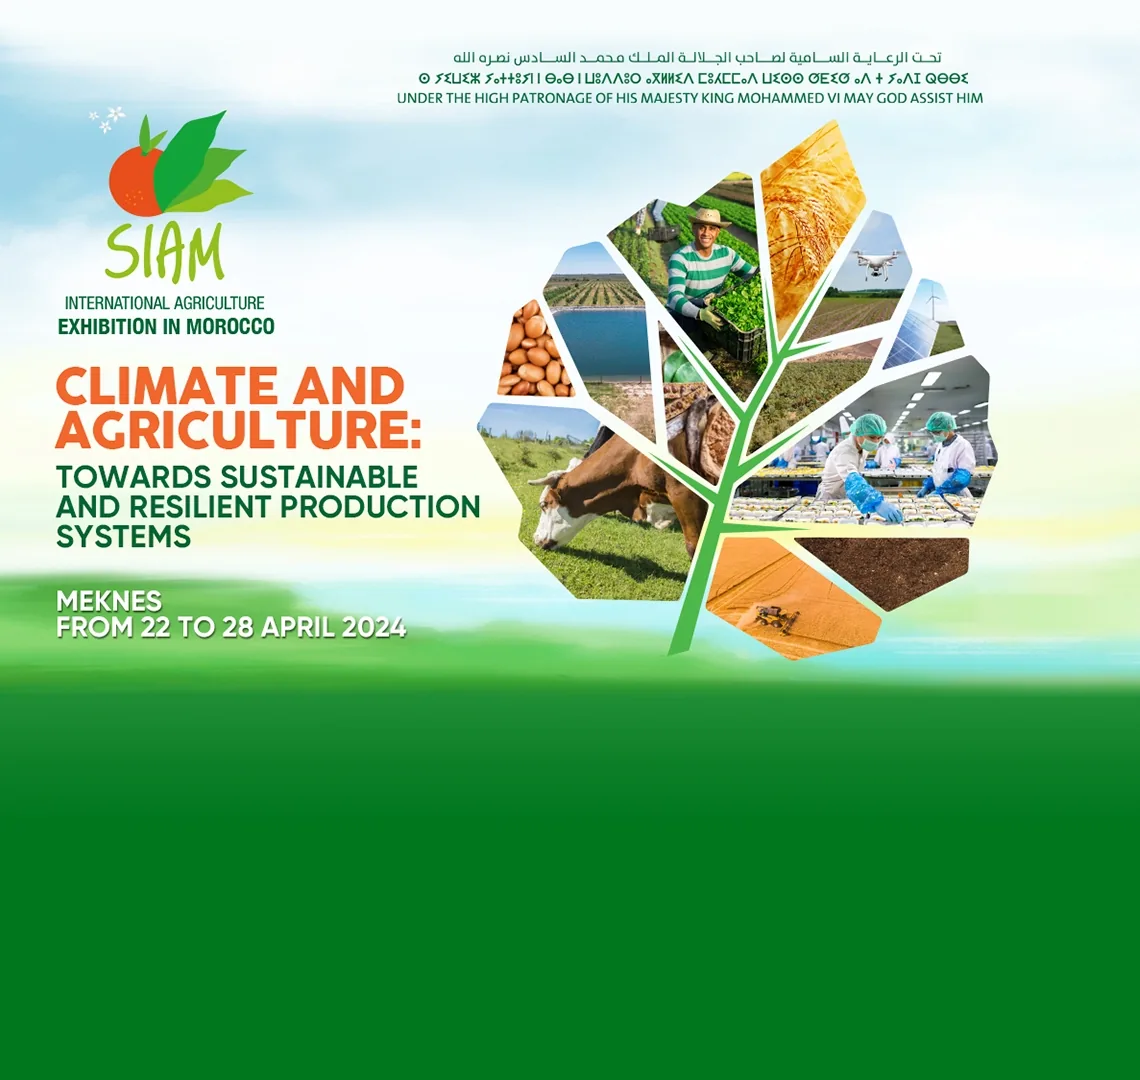 Purificados-International-Argriculture-Exhibition-in-Morocco-SIAM-2024